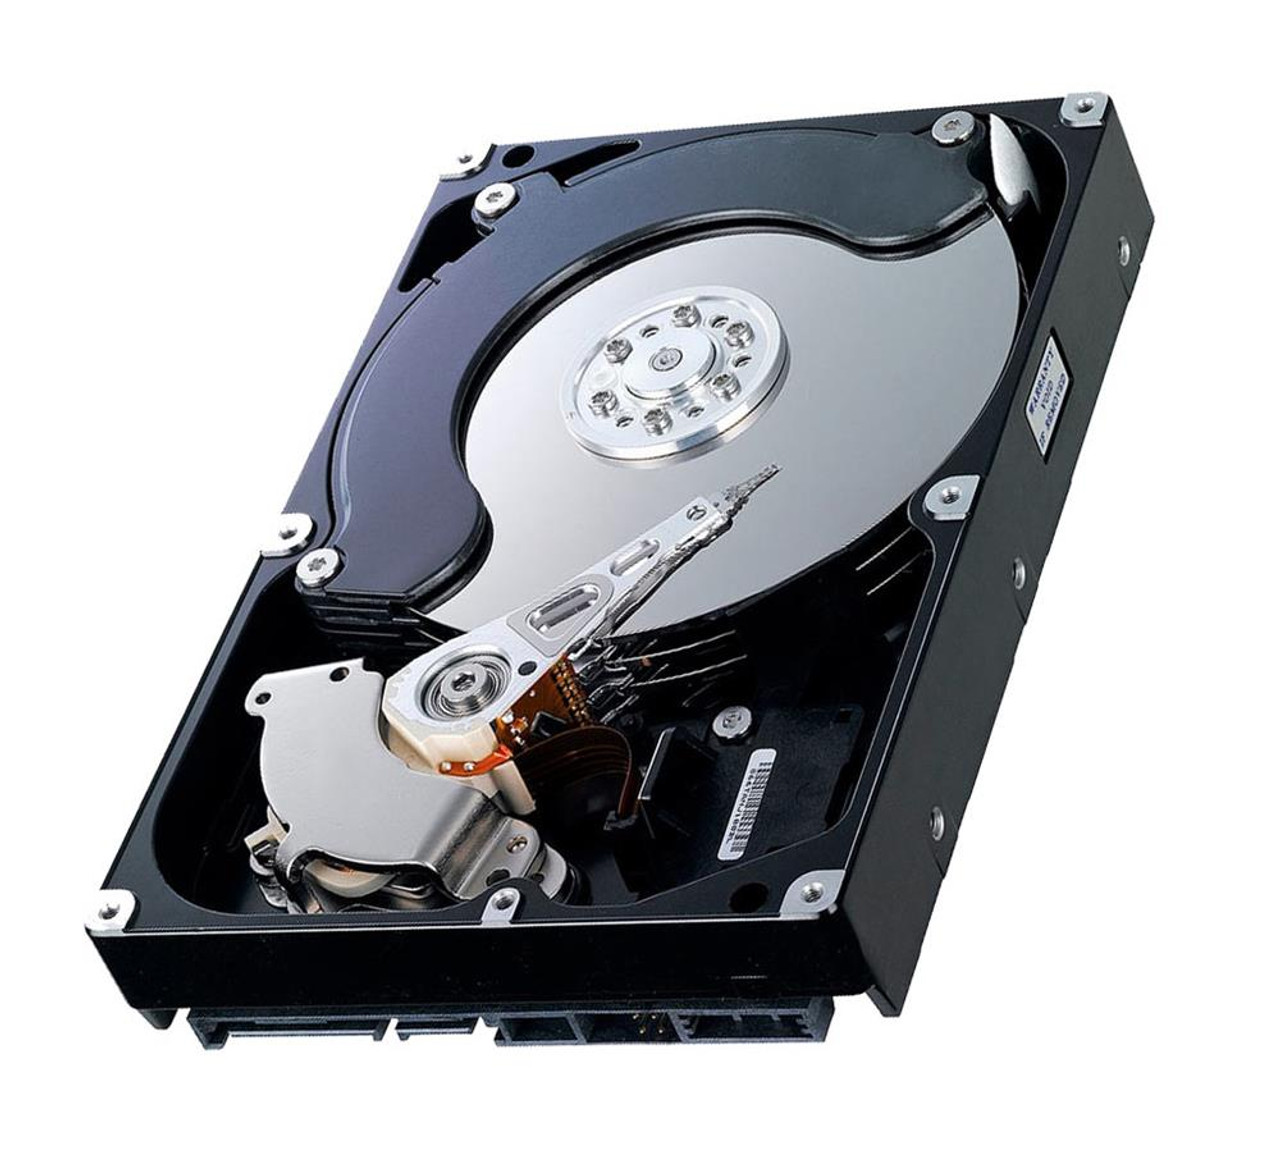 AC11200-32LA - Western Digital Caviar 1.2GB 5200RPM ATA-33 256KB Cache 3.5-inch Hard Disk Drive